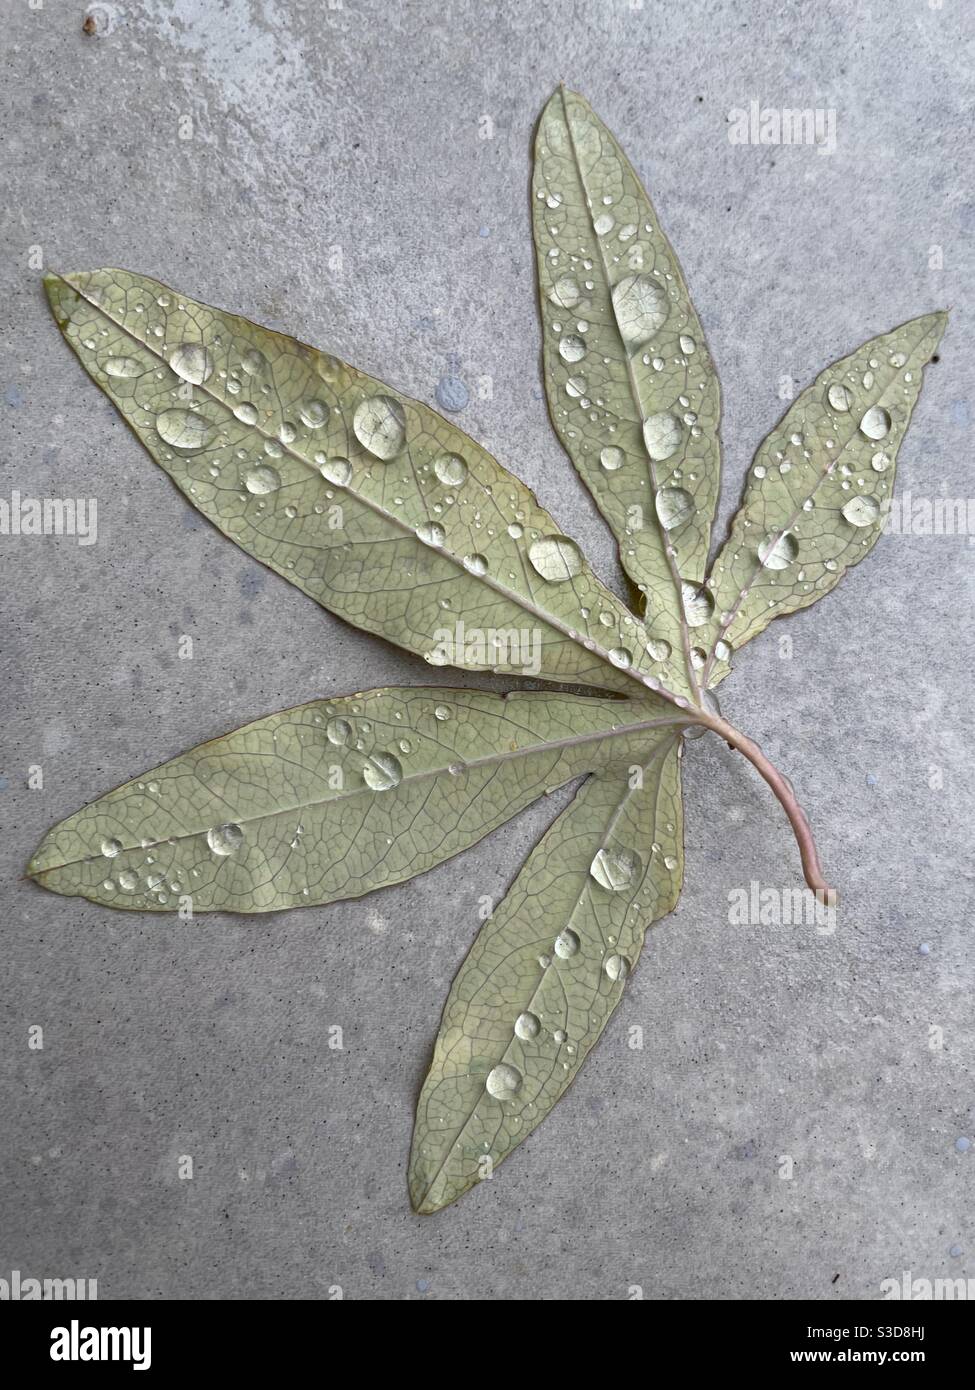 Hoja de Passiflora con gotas de agua. Passiflora leaves with water droplets. Stock Photo